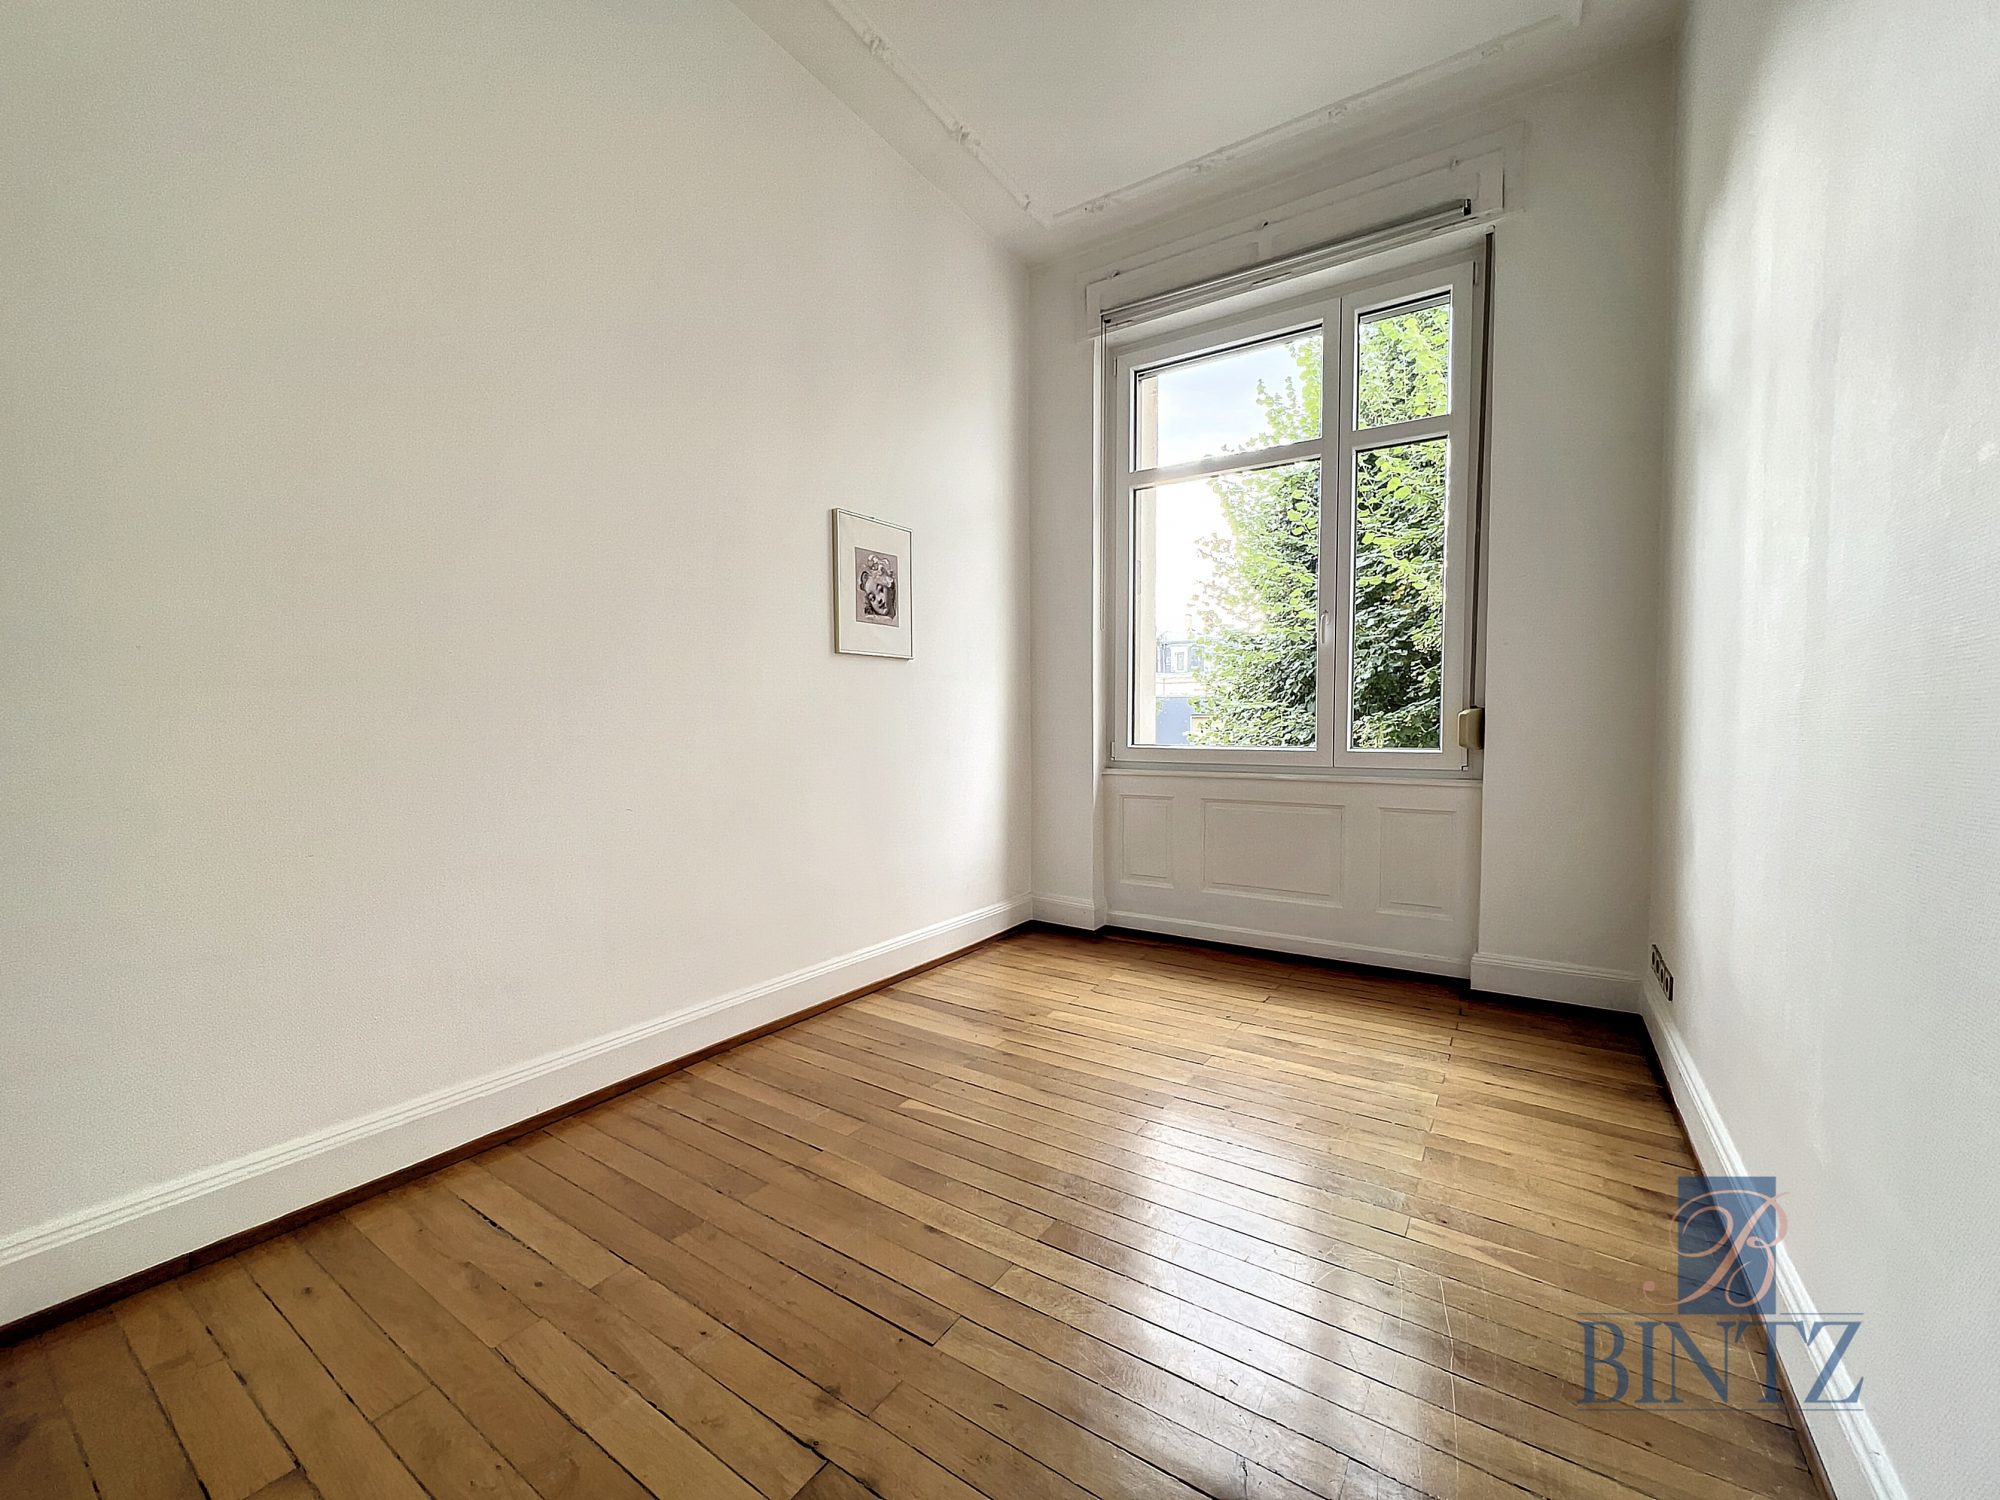 4 pièces avec terrasse - achat appartement Strasbourg - Bintz Immobilier - 11